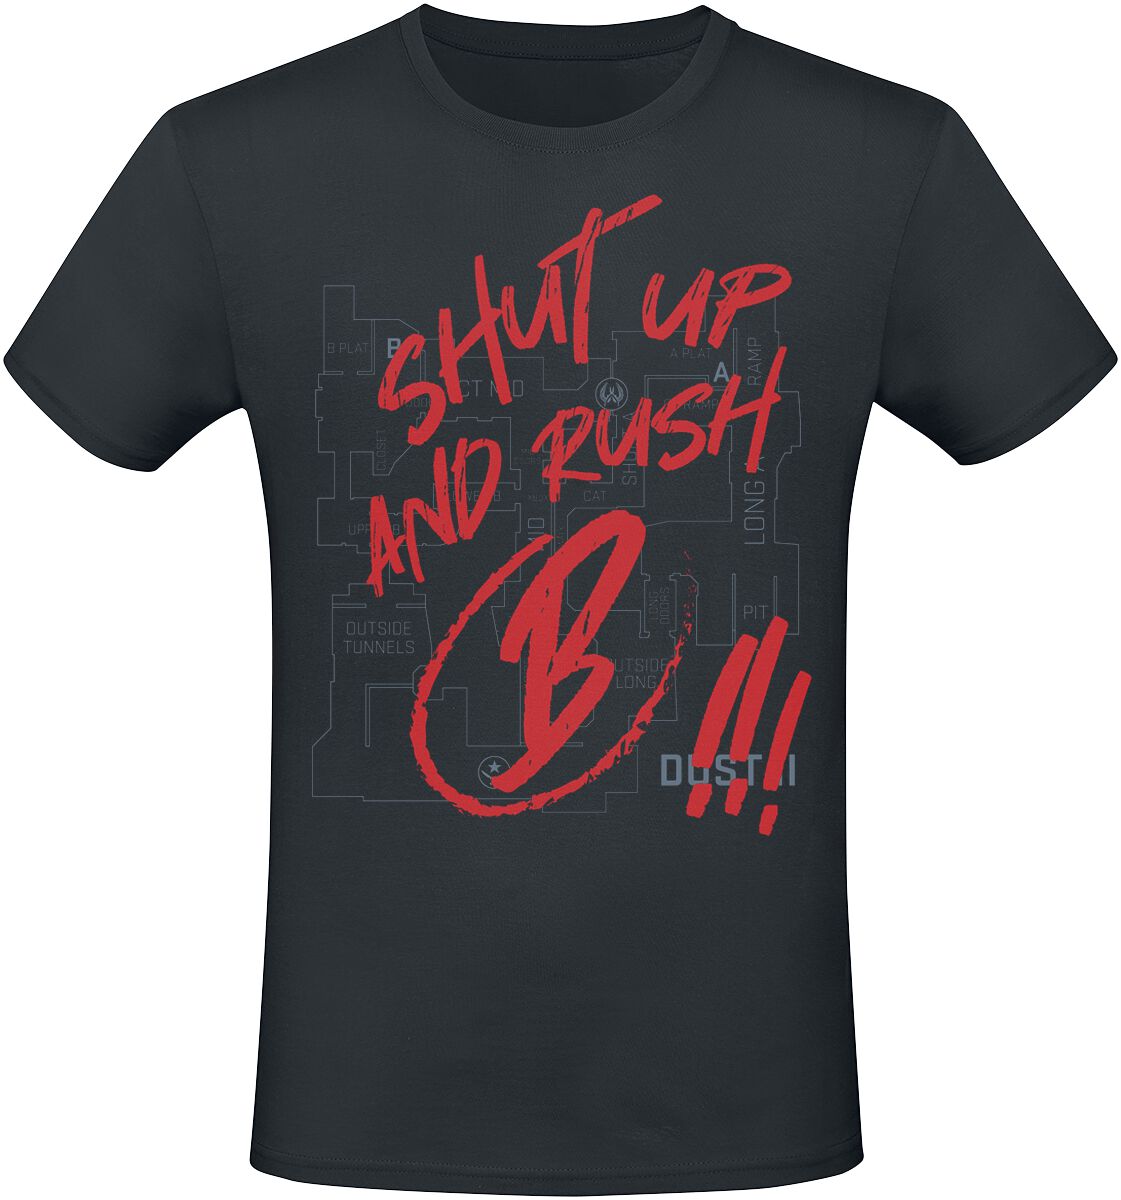 Counter-Strike 2 - Shut Up And Rush B !!! T-Shirt schwarz in L